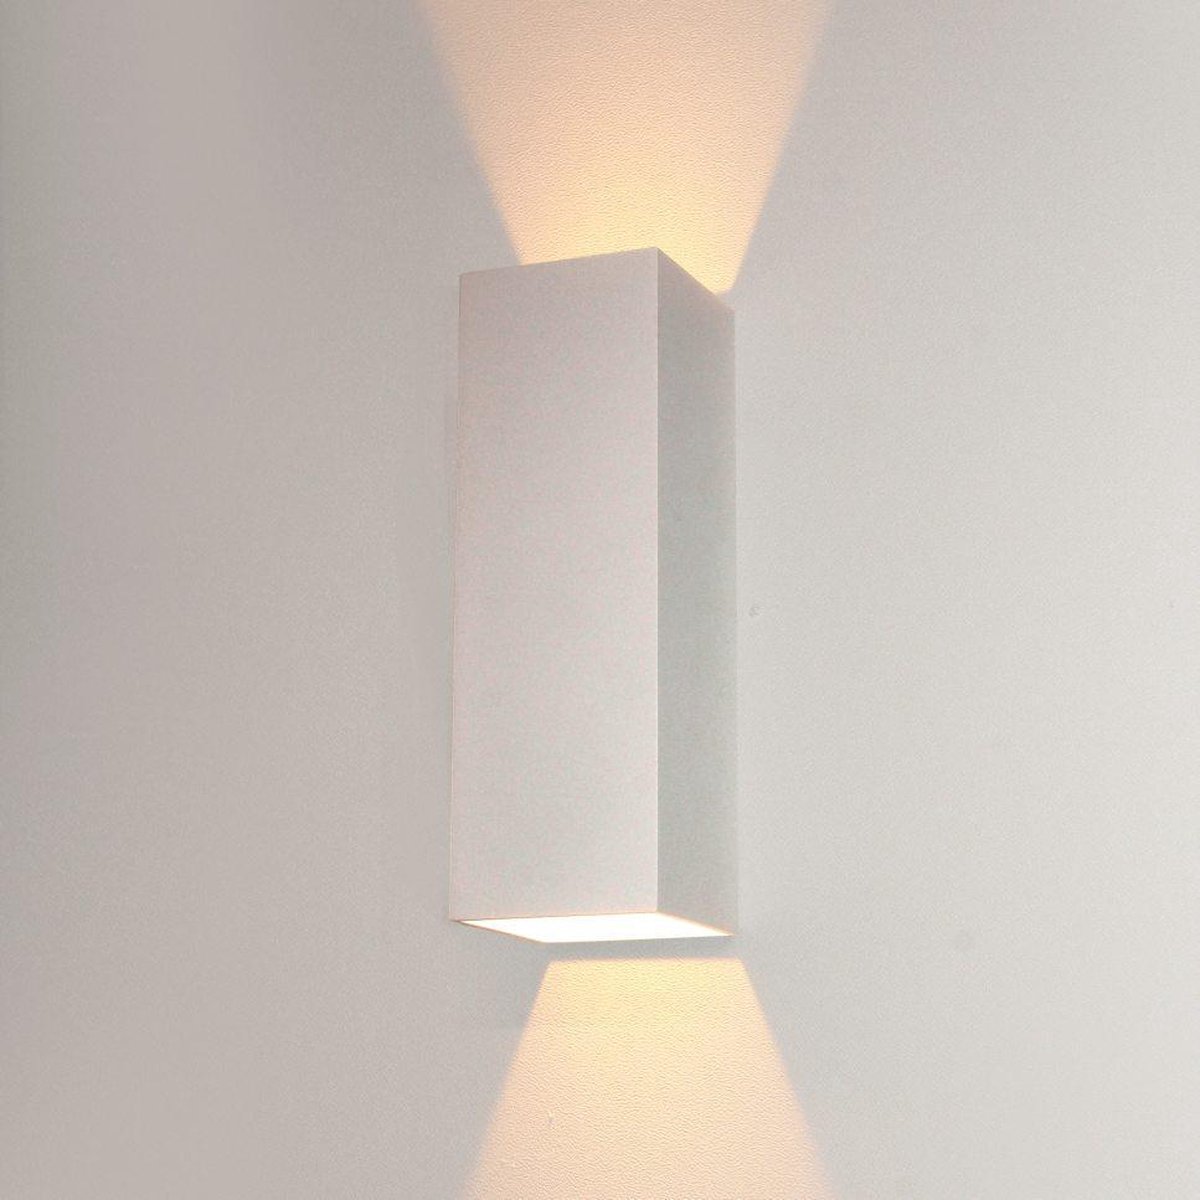 Wandlamp Vegas 250 Wit - 8x8x25cm - LED 2x4W 2700K 2x360lm - IP65 - Dimbaar > wandlamp binnen wit | wandlamp buiten wit | wandlamp wit | buitenlamp wit | muurlamp wit | led lamp wit | sfeer lamp wit | design lamp wit